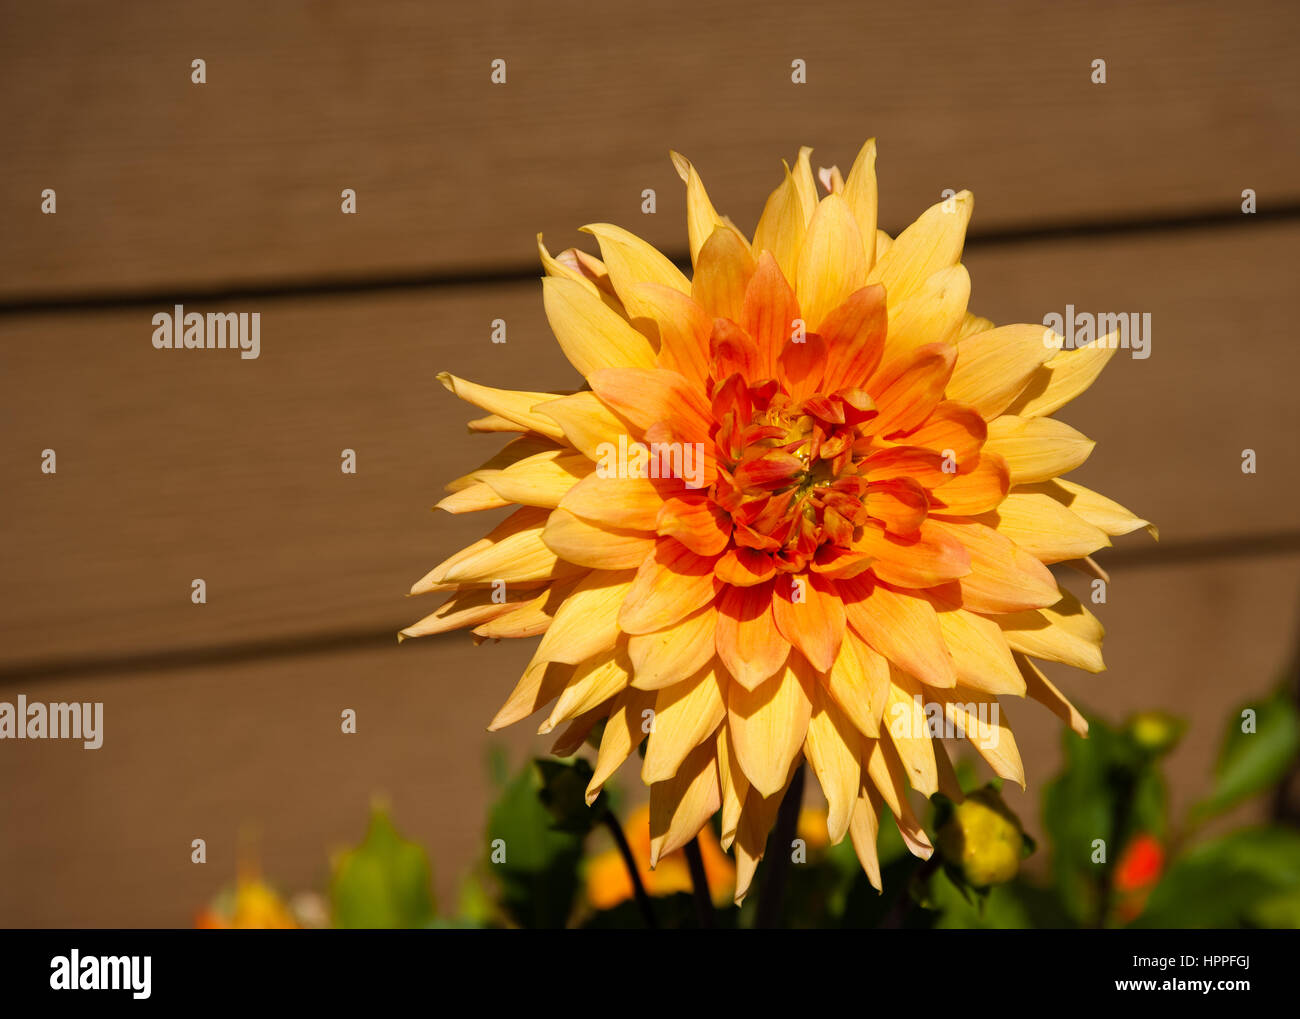 Sunlit flower in a garden Stock Photo